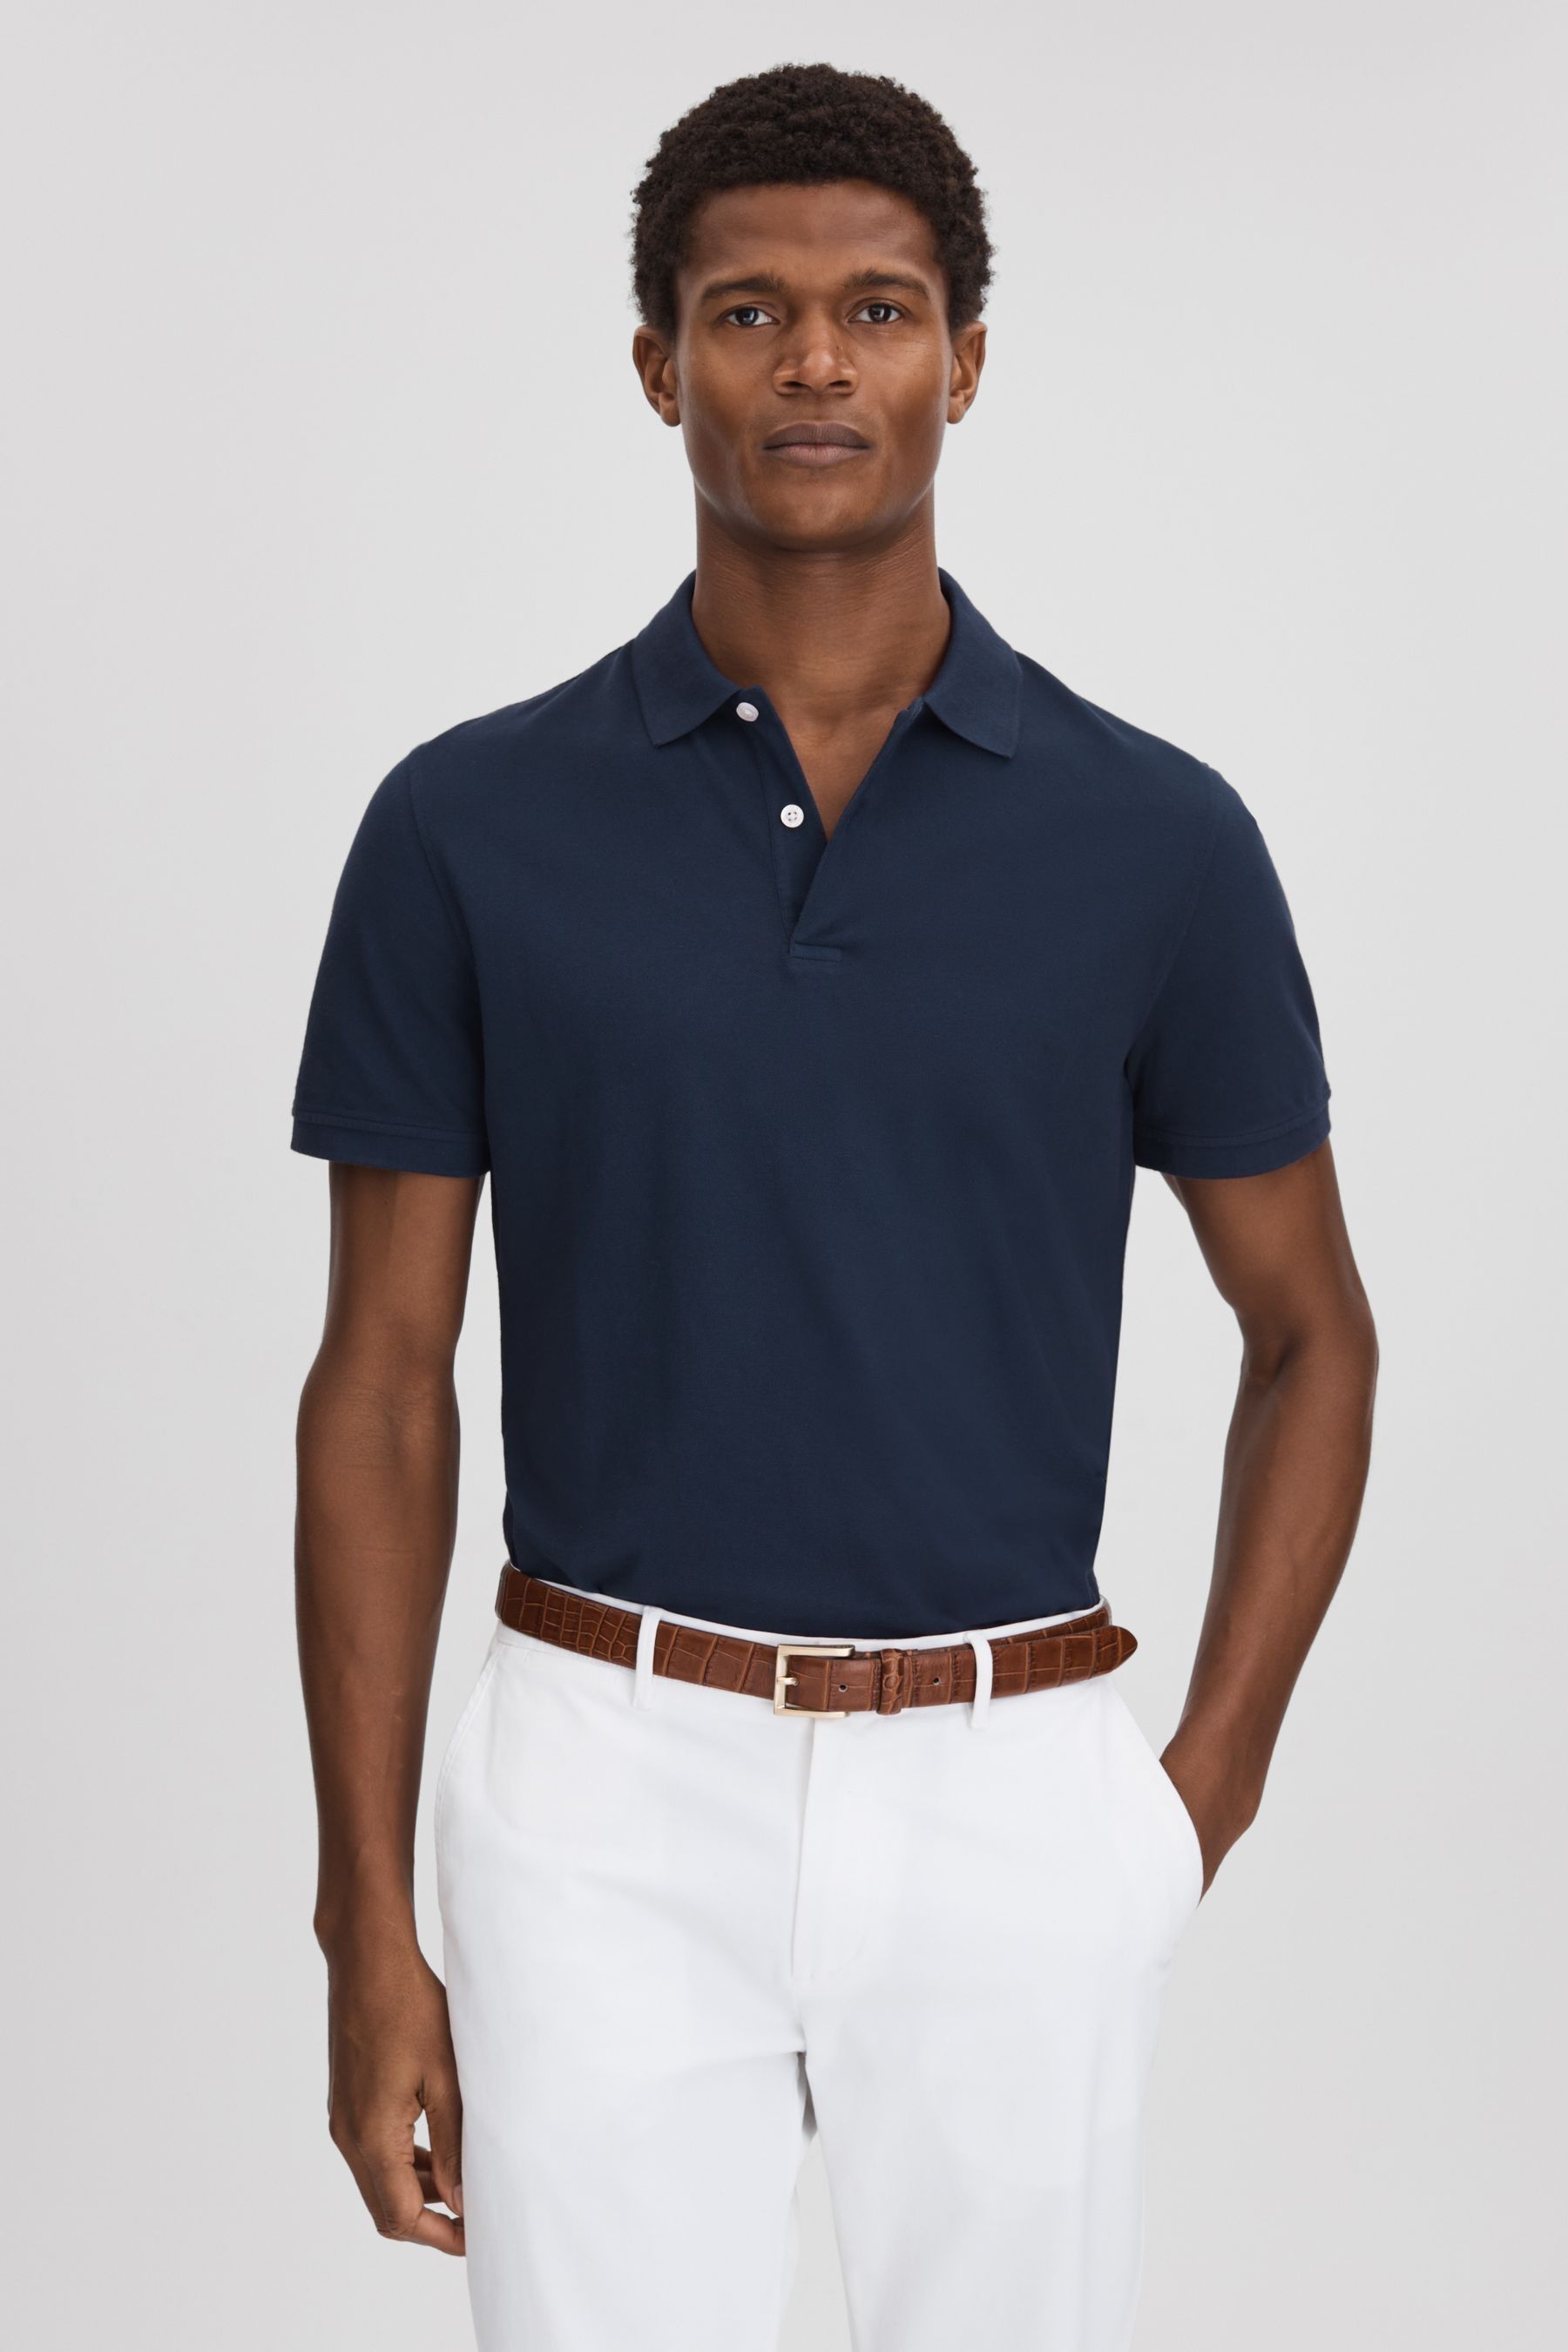 Reiss Puro - Airforce Blue Garment Dyed Cotton Polo Shirt, M